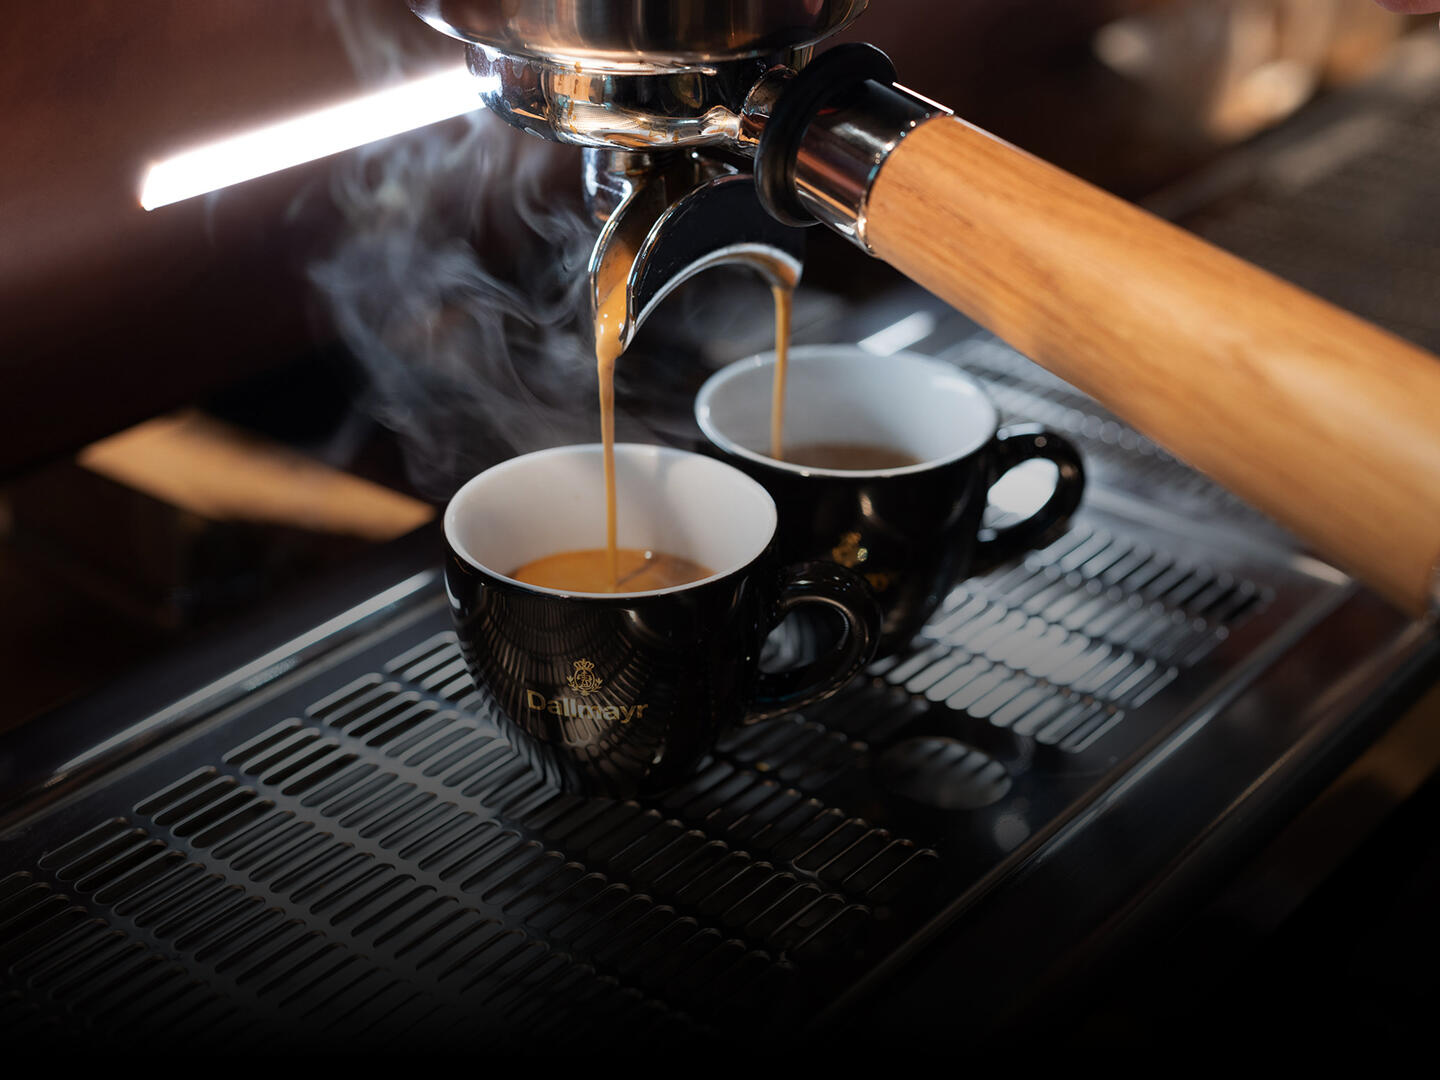 Dallmayr Espresso d'Oro přechází z portafiltru do dvou šálků na espresso